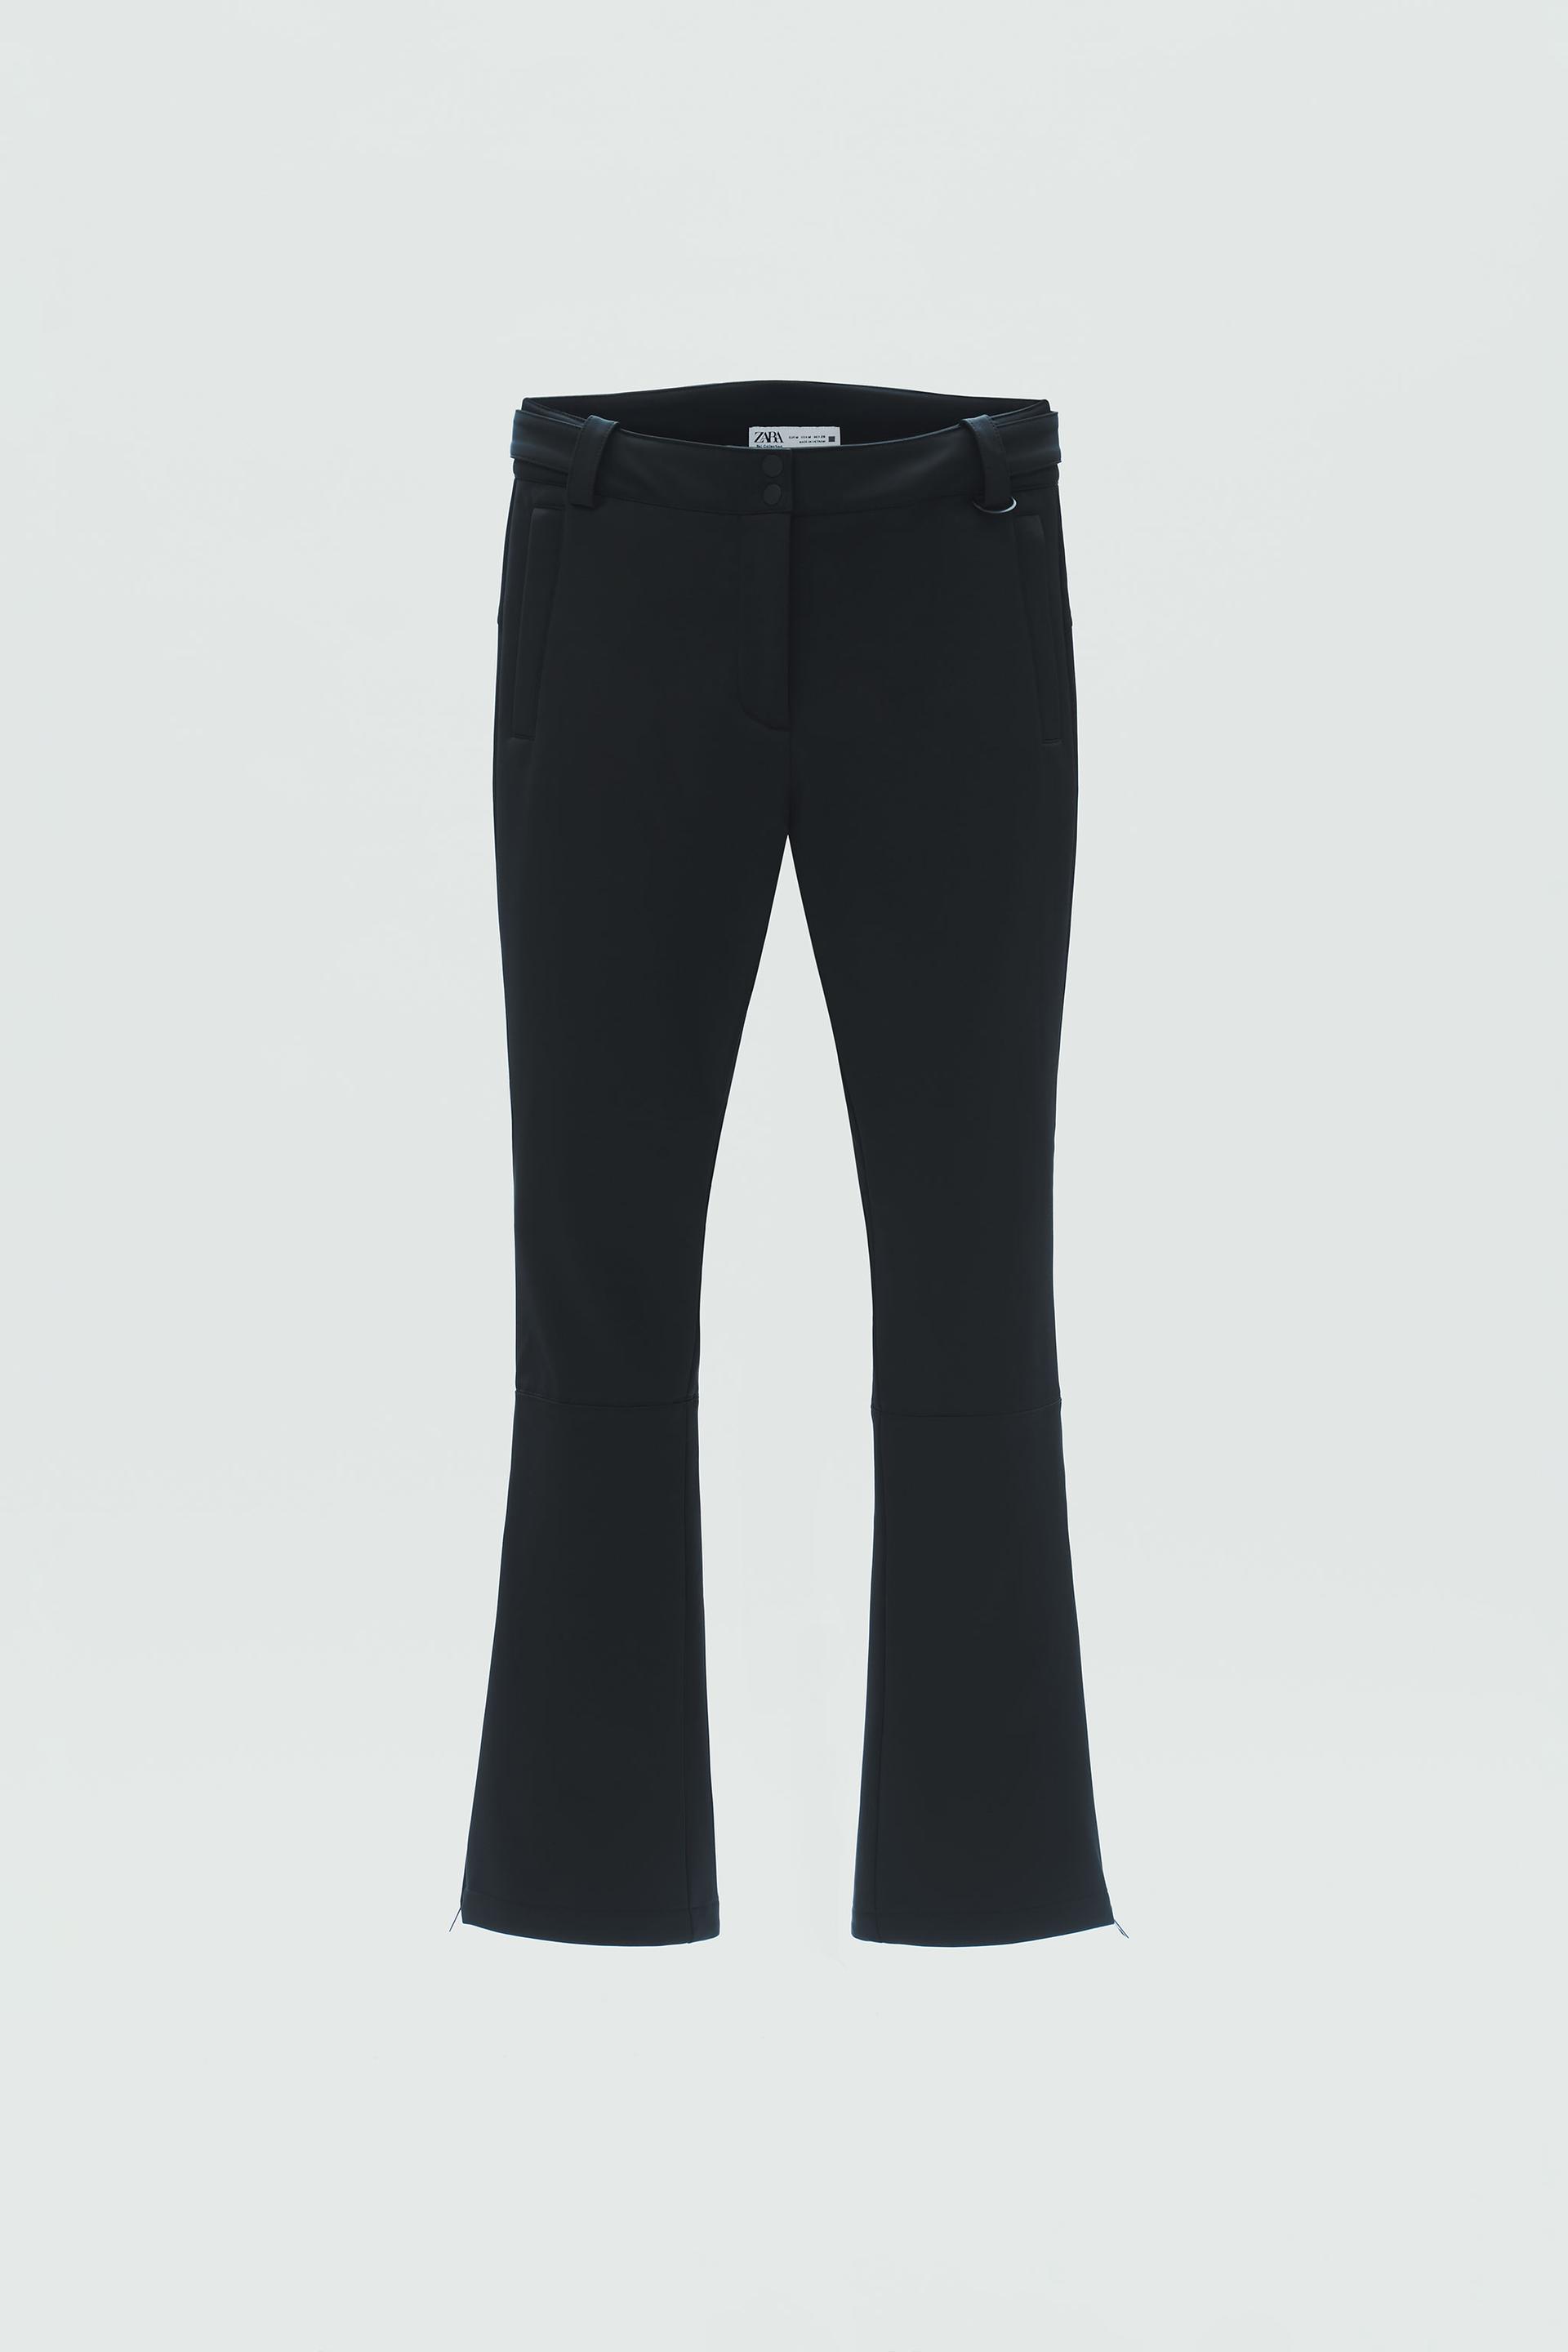 Zara Flared High Waisted Pants - Dress Work Pants - Black